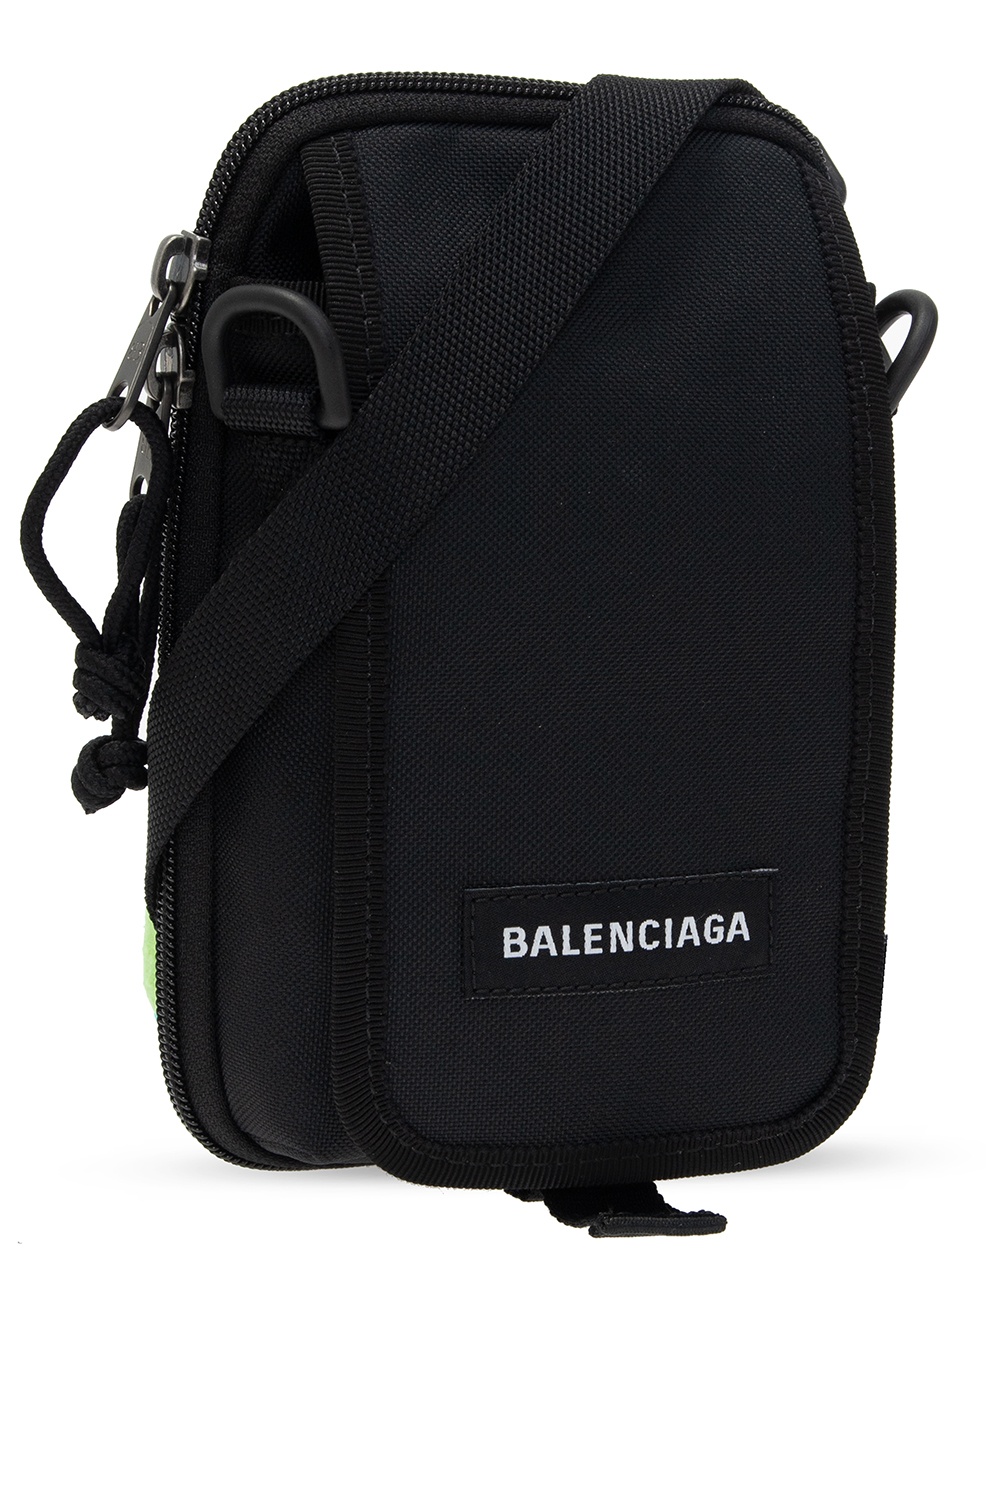 Balenciaga Shoulder Isabel bag with logo